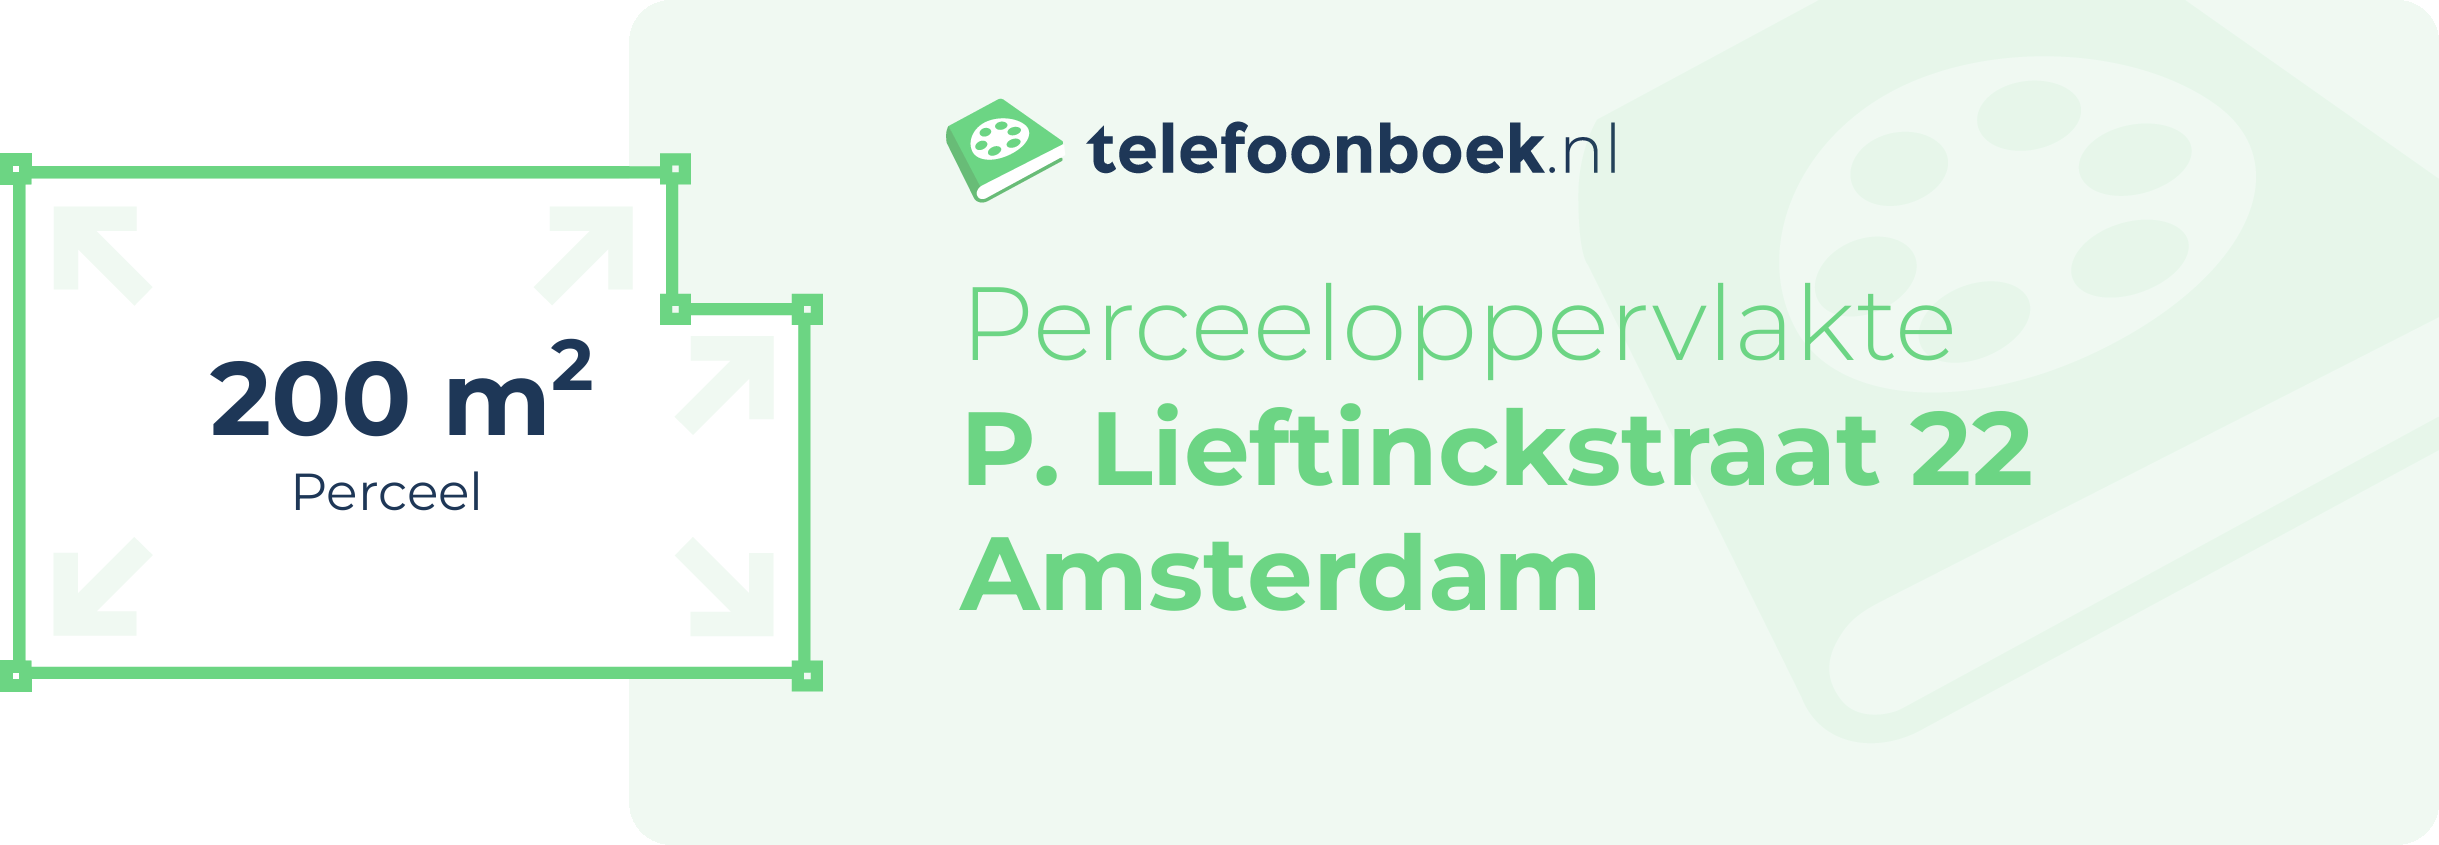 Perceeloppervlakte P. Lieftinckstraat 22 Amsterdam